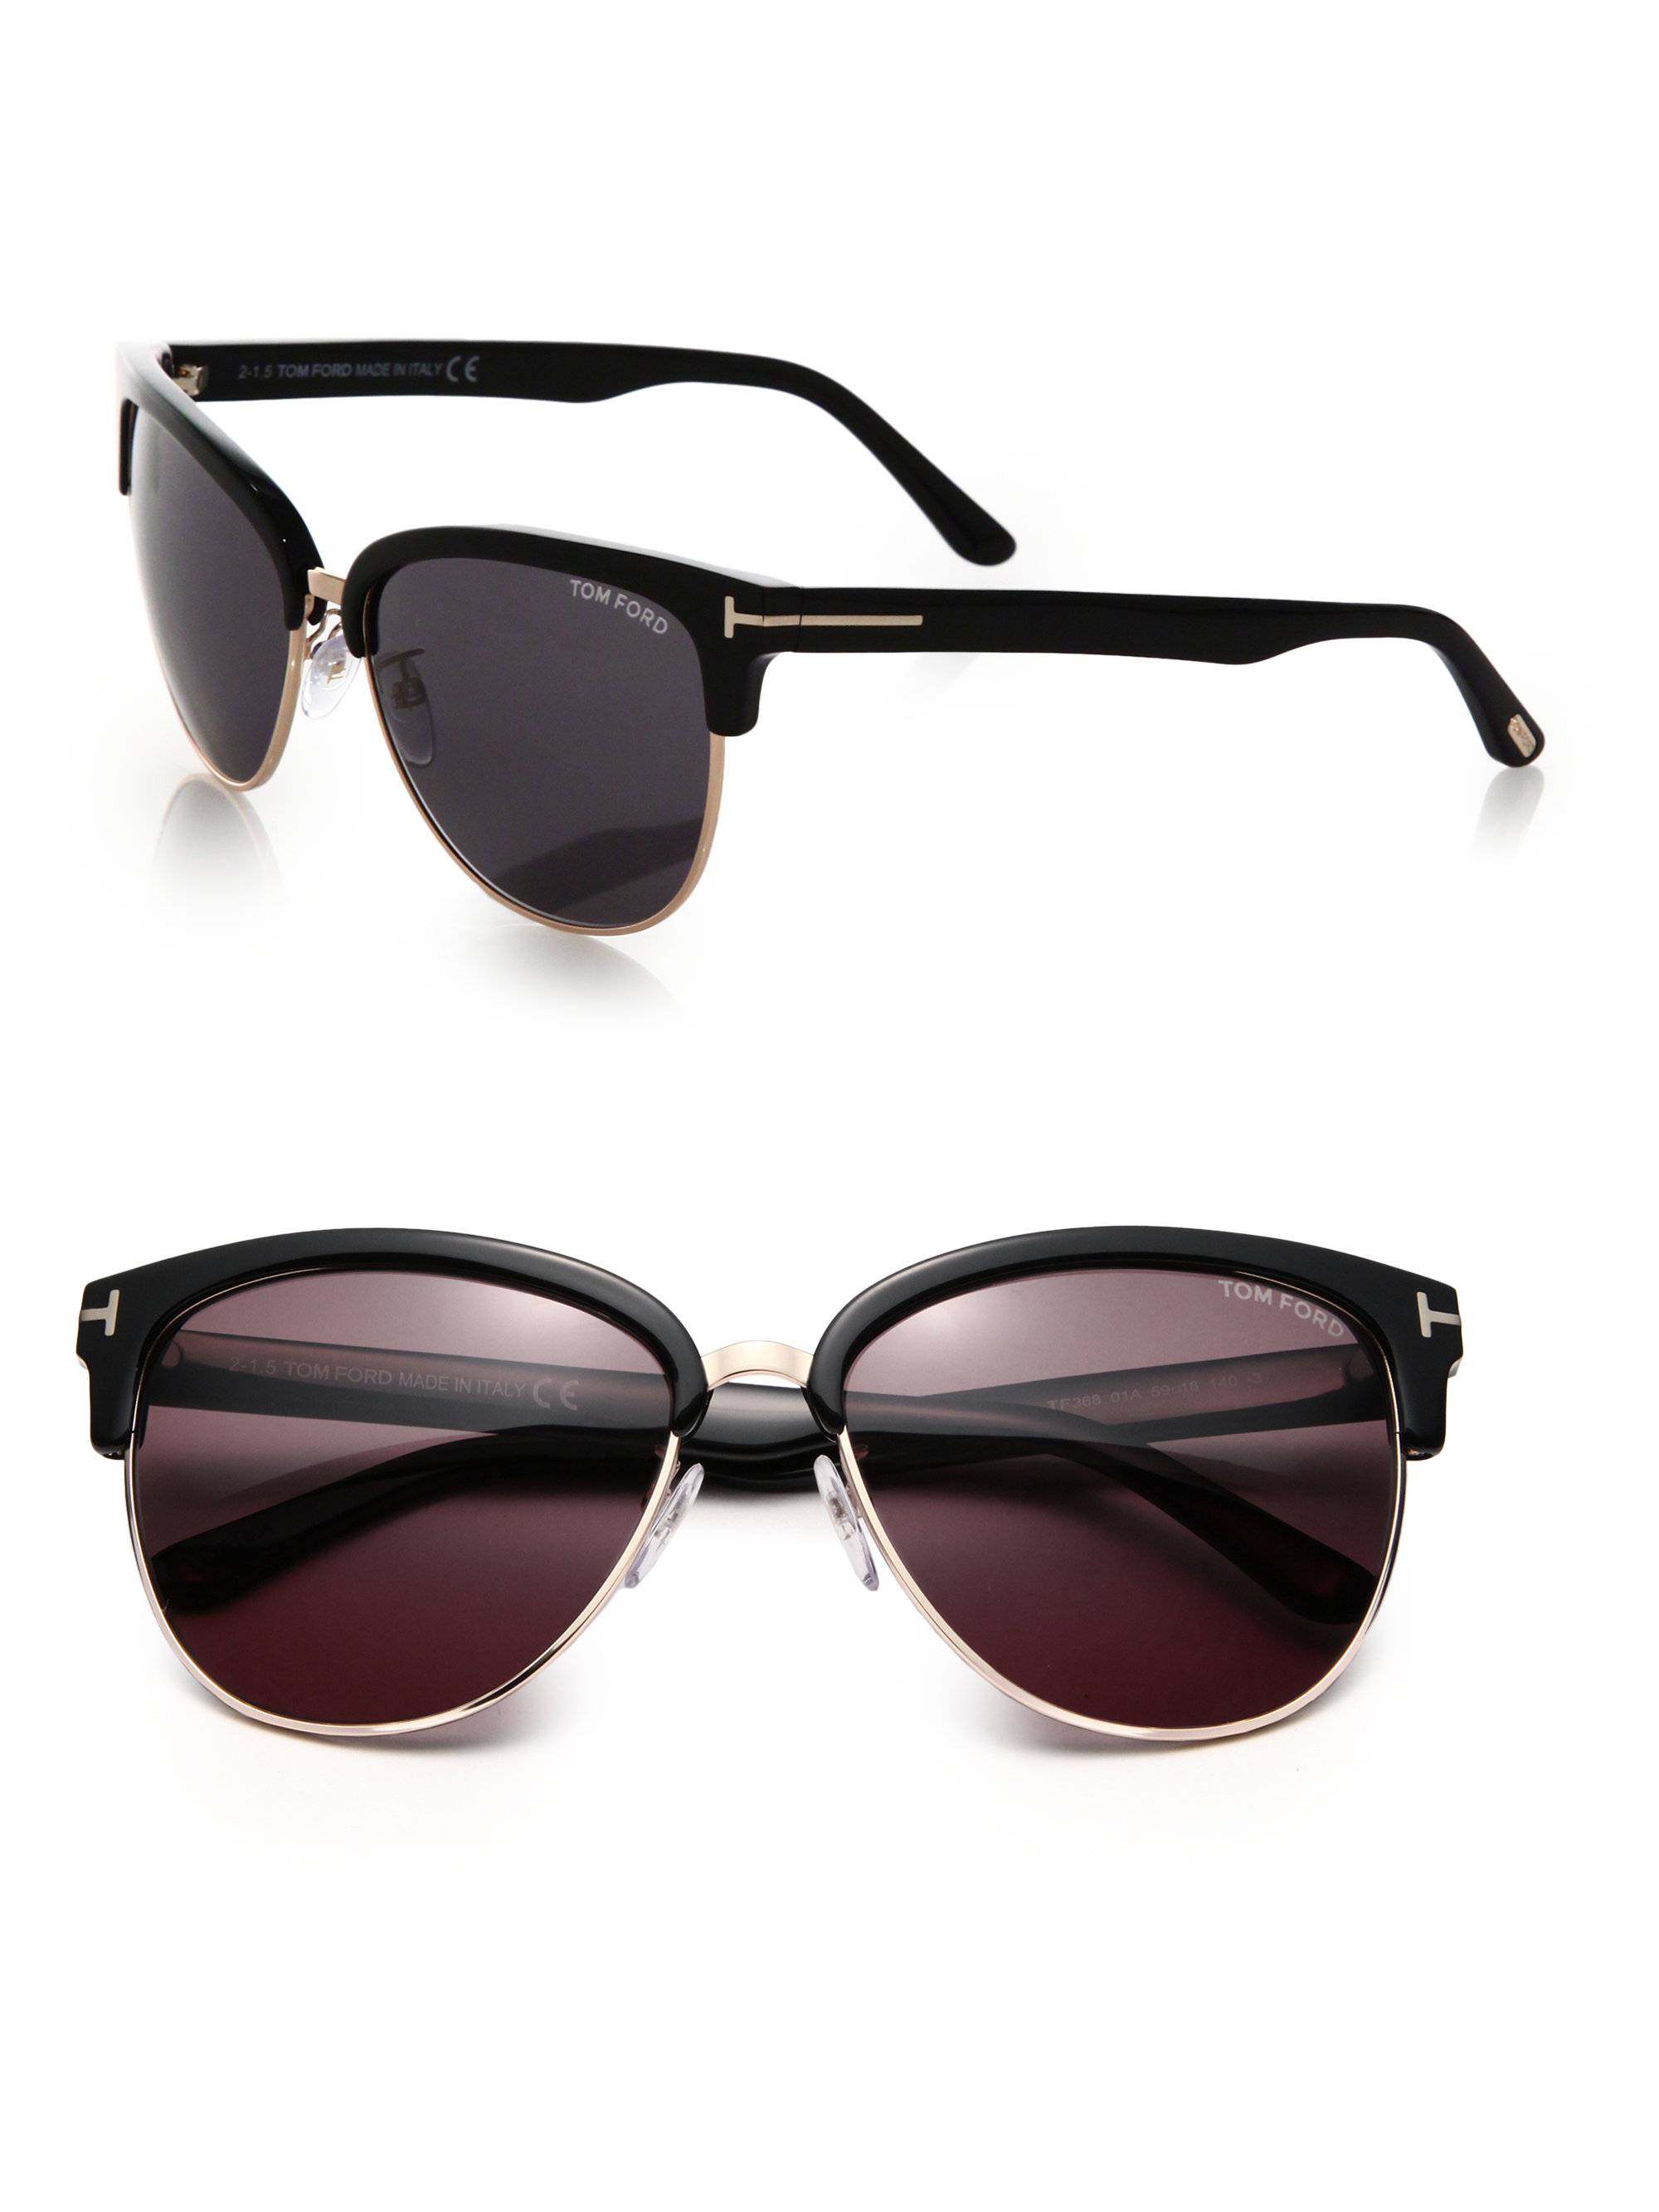 Tom ford black square frame sunglasses #7